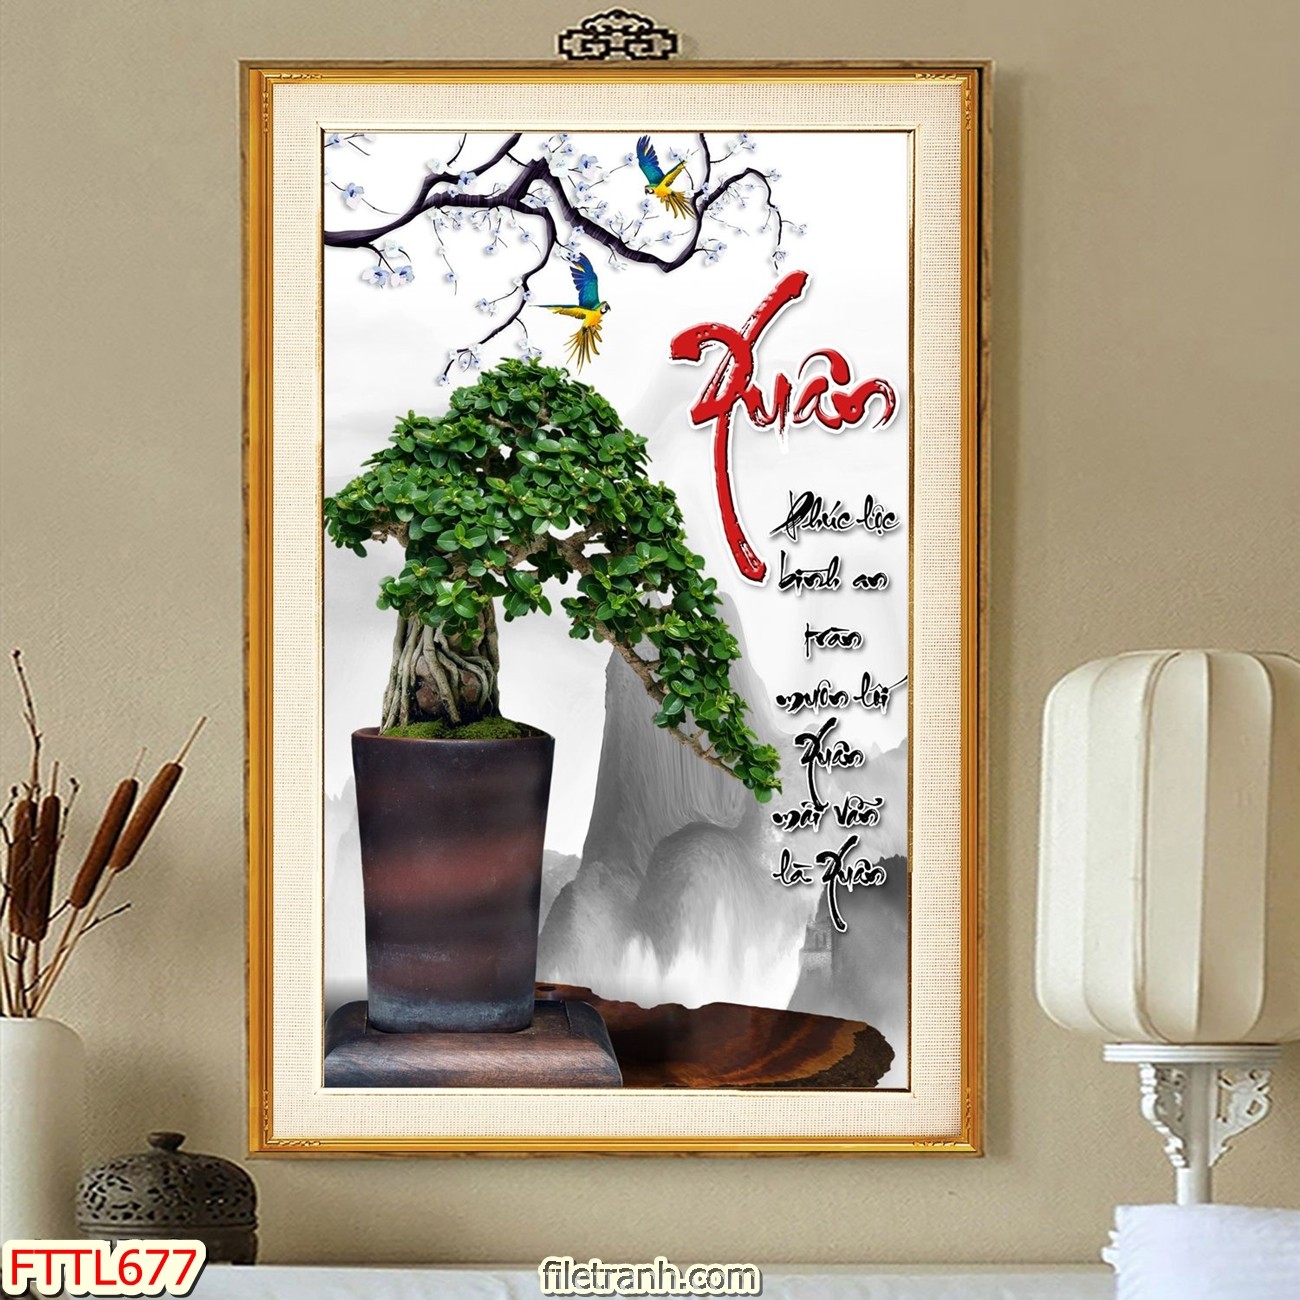 https://filetranh.com/file-tranh-chau-mai-bonsai/file-tranh-chau-mai-bonsai-fttl677.html